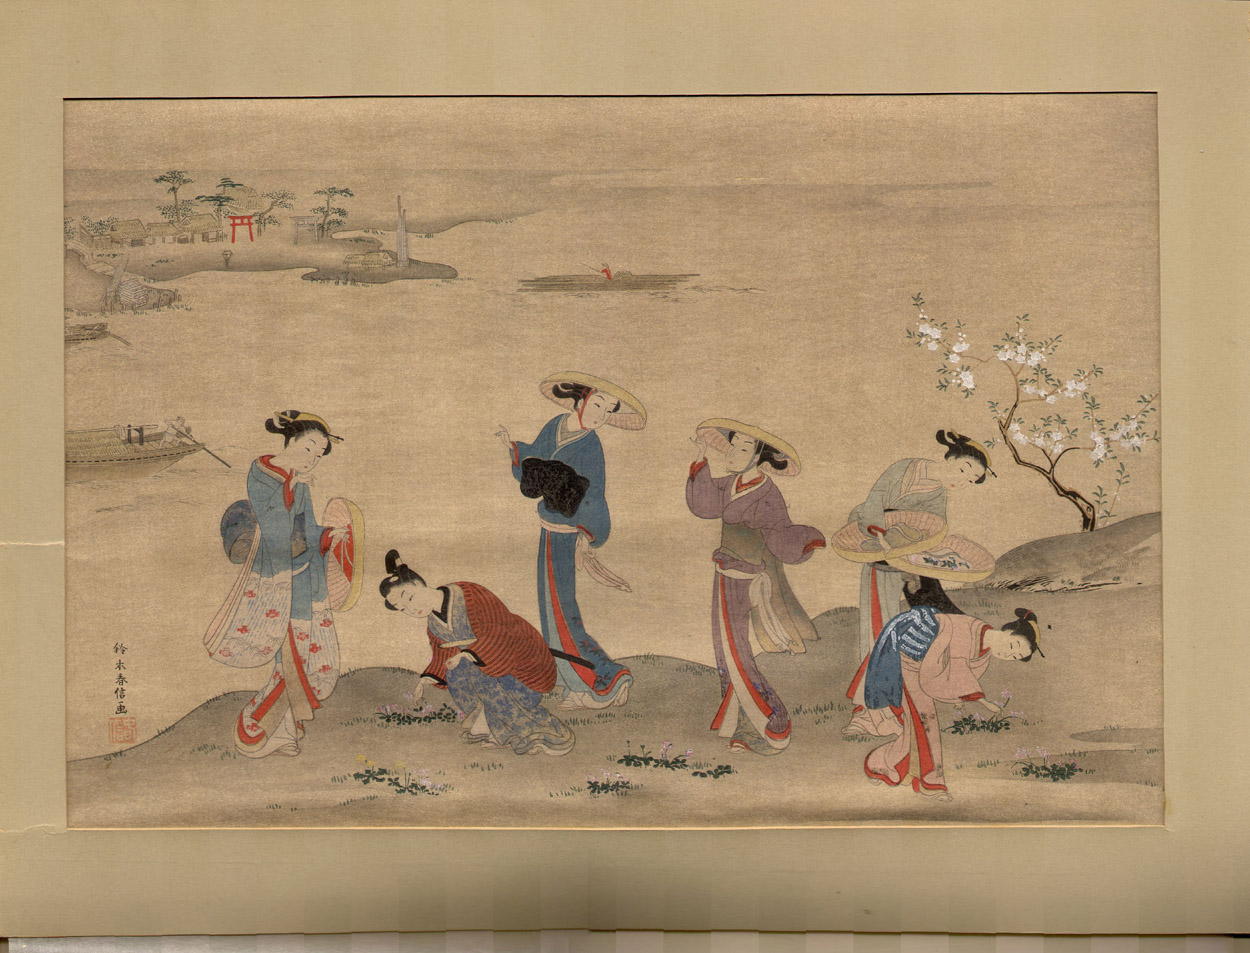 The Art of Japan, Pictorial Art, Emperor's Edition, Brinkley, 1901